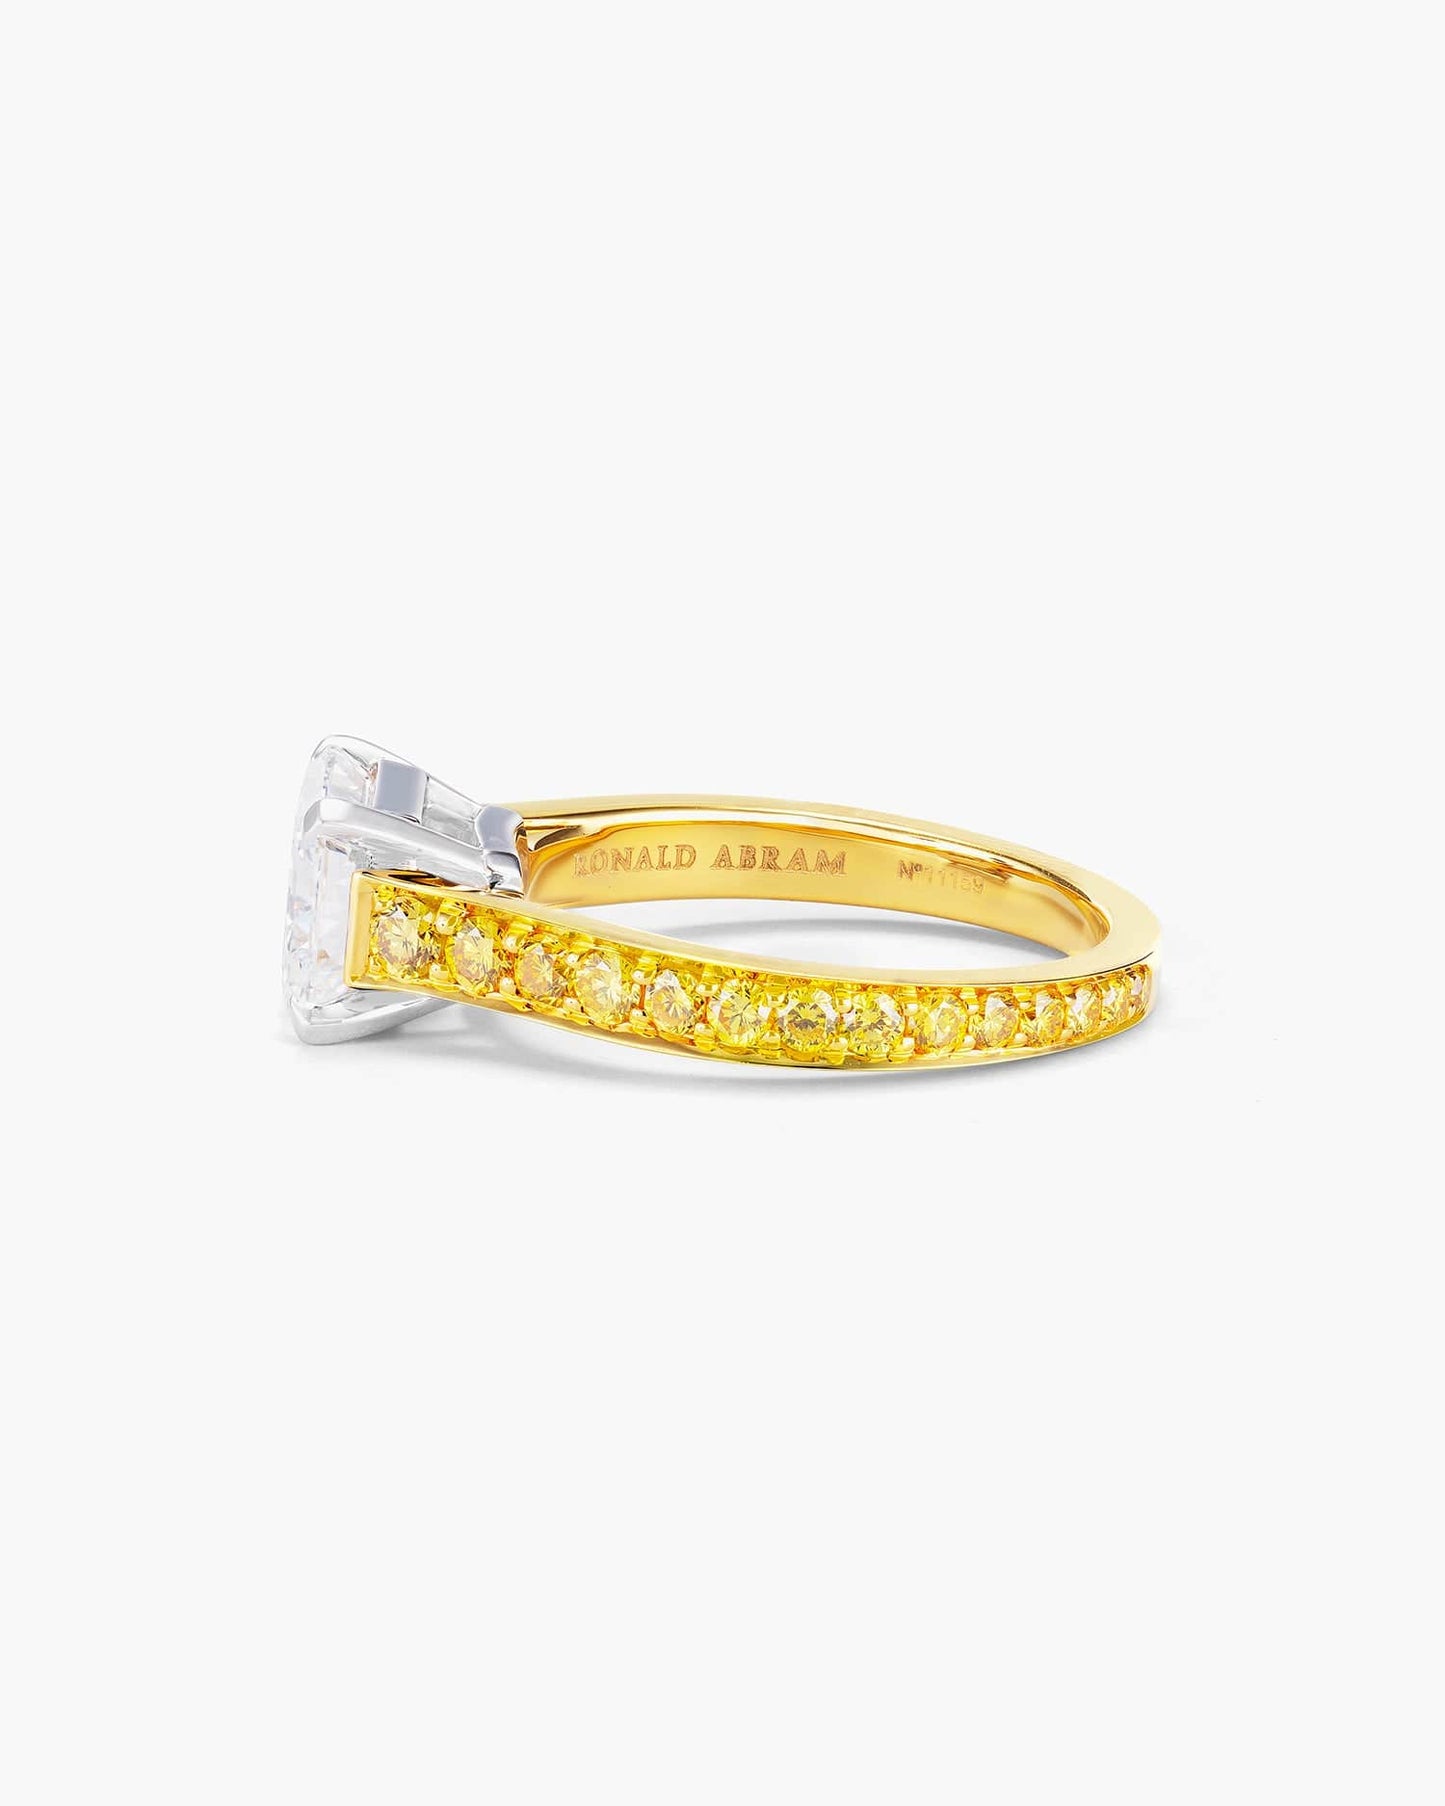 2.02 carat Radiant Cut White and Yellow Diamond Ring